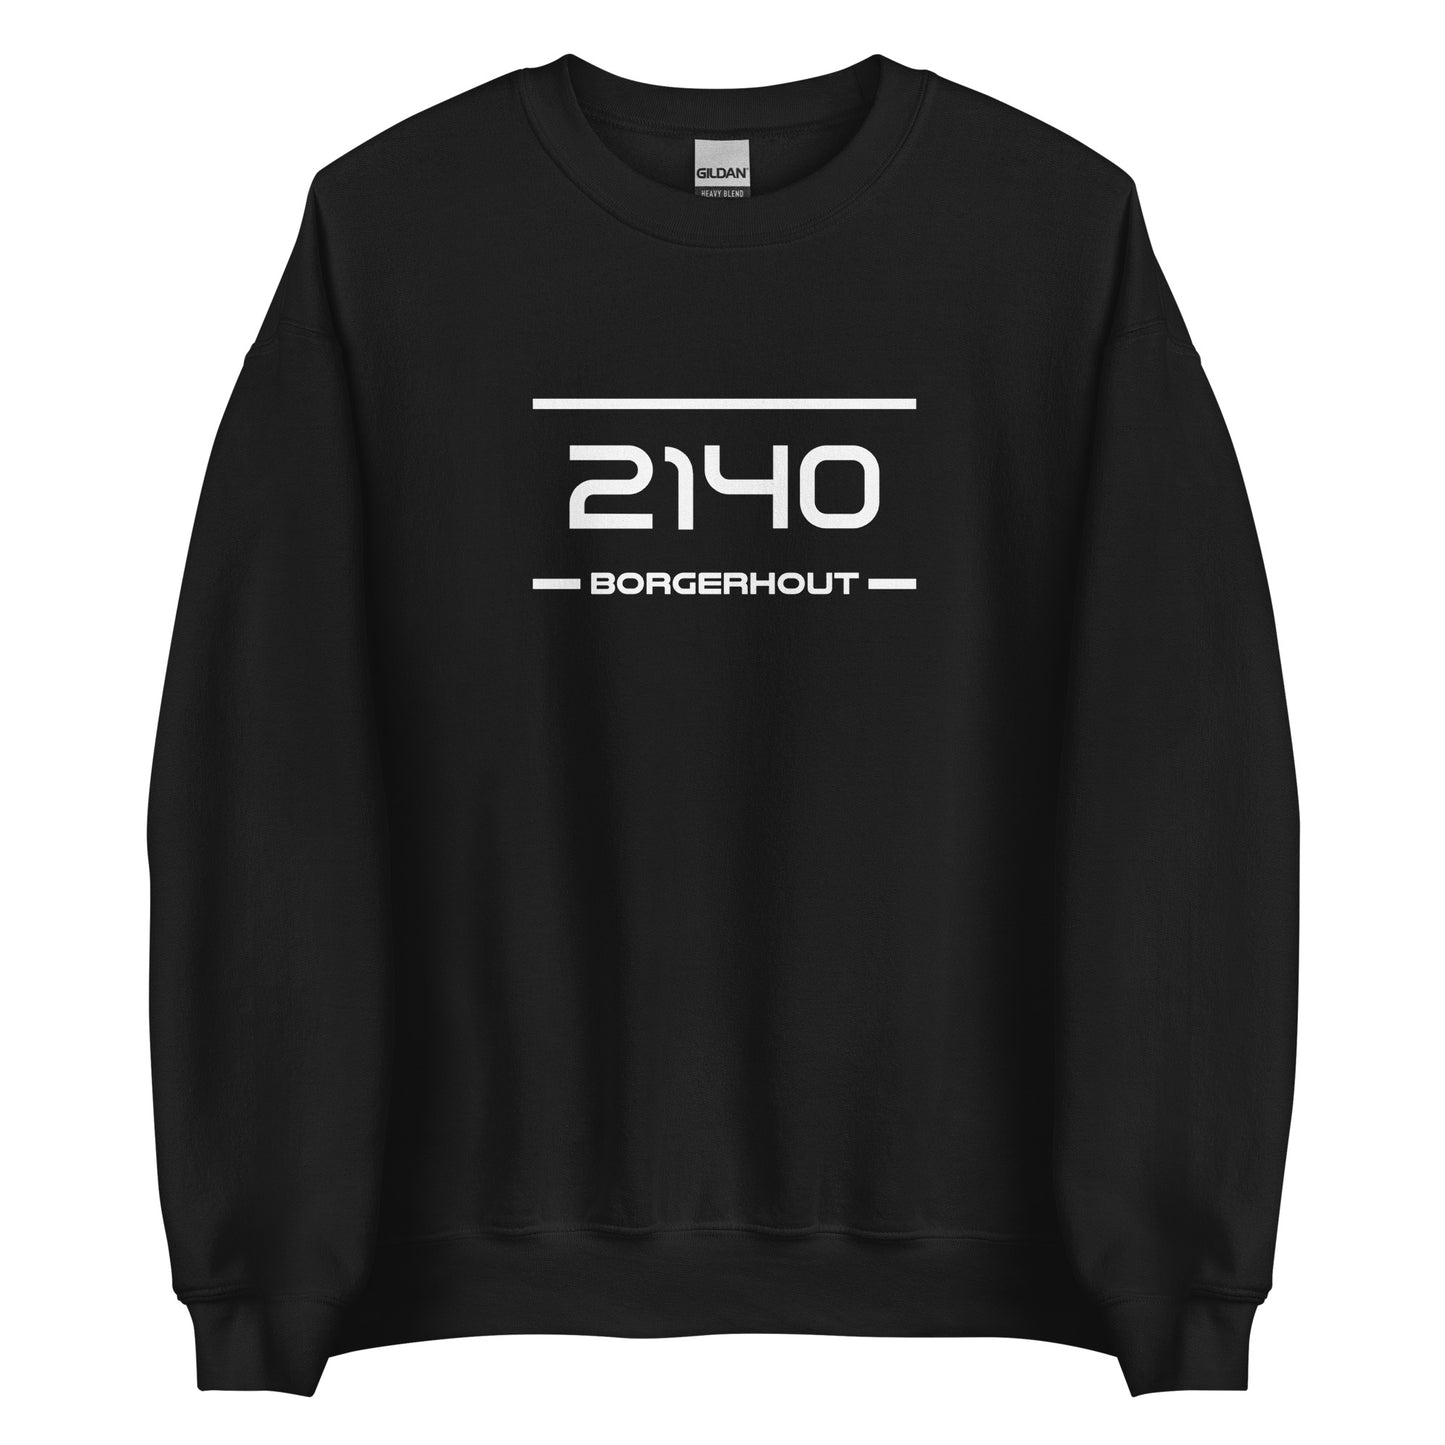 Sweater - 2140 - Borgerhout (M/V)